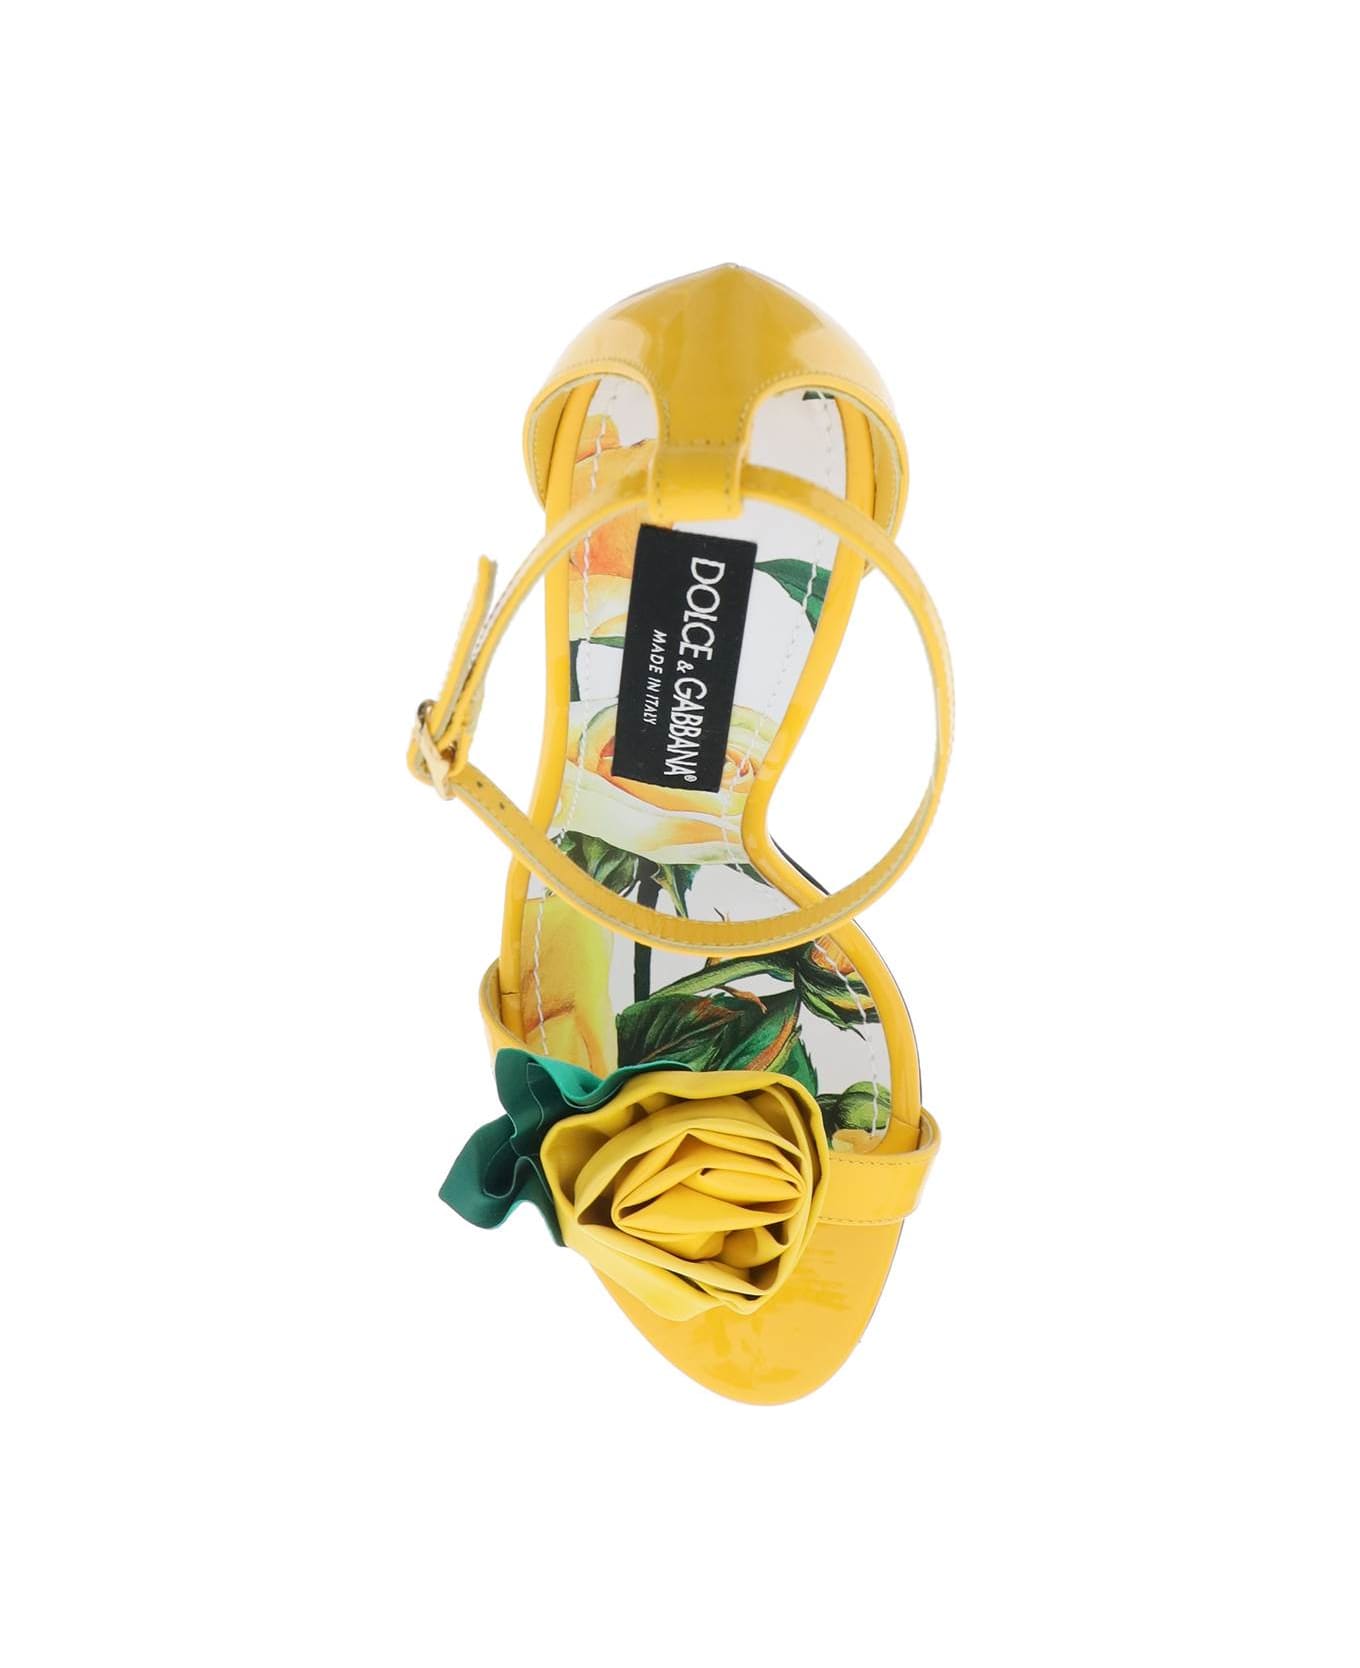 Dolce & Gabbana Heeled Sandals - GIALLO MULTICOLOR (Yellow)